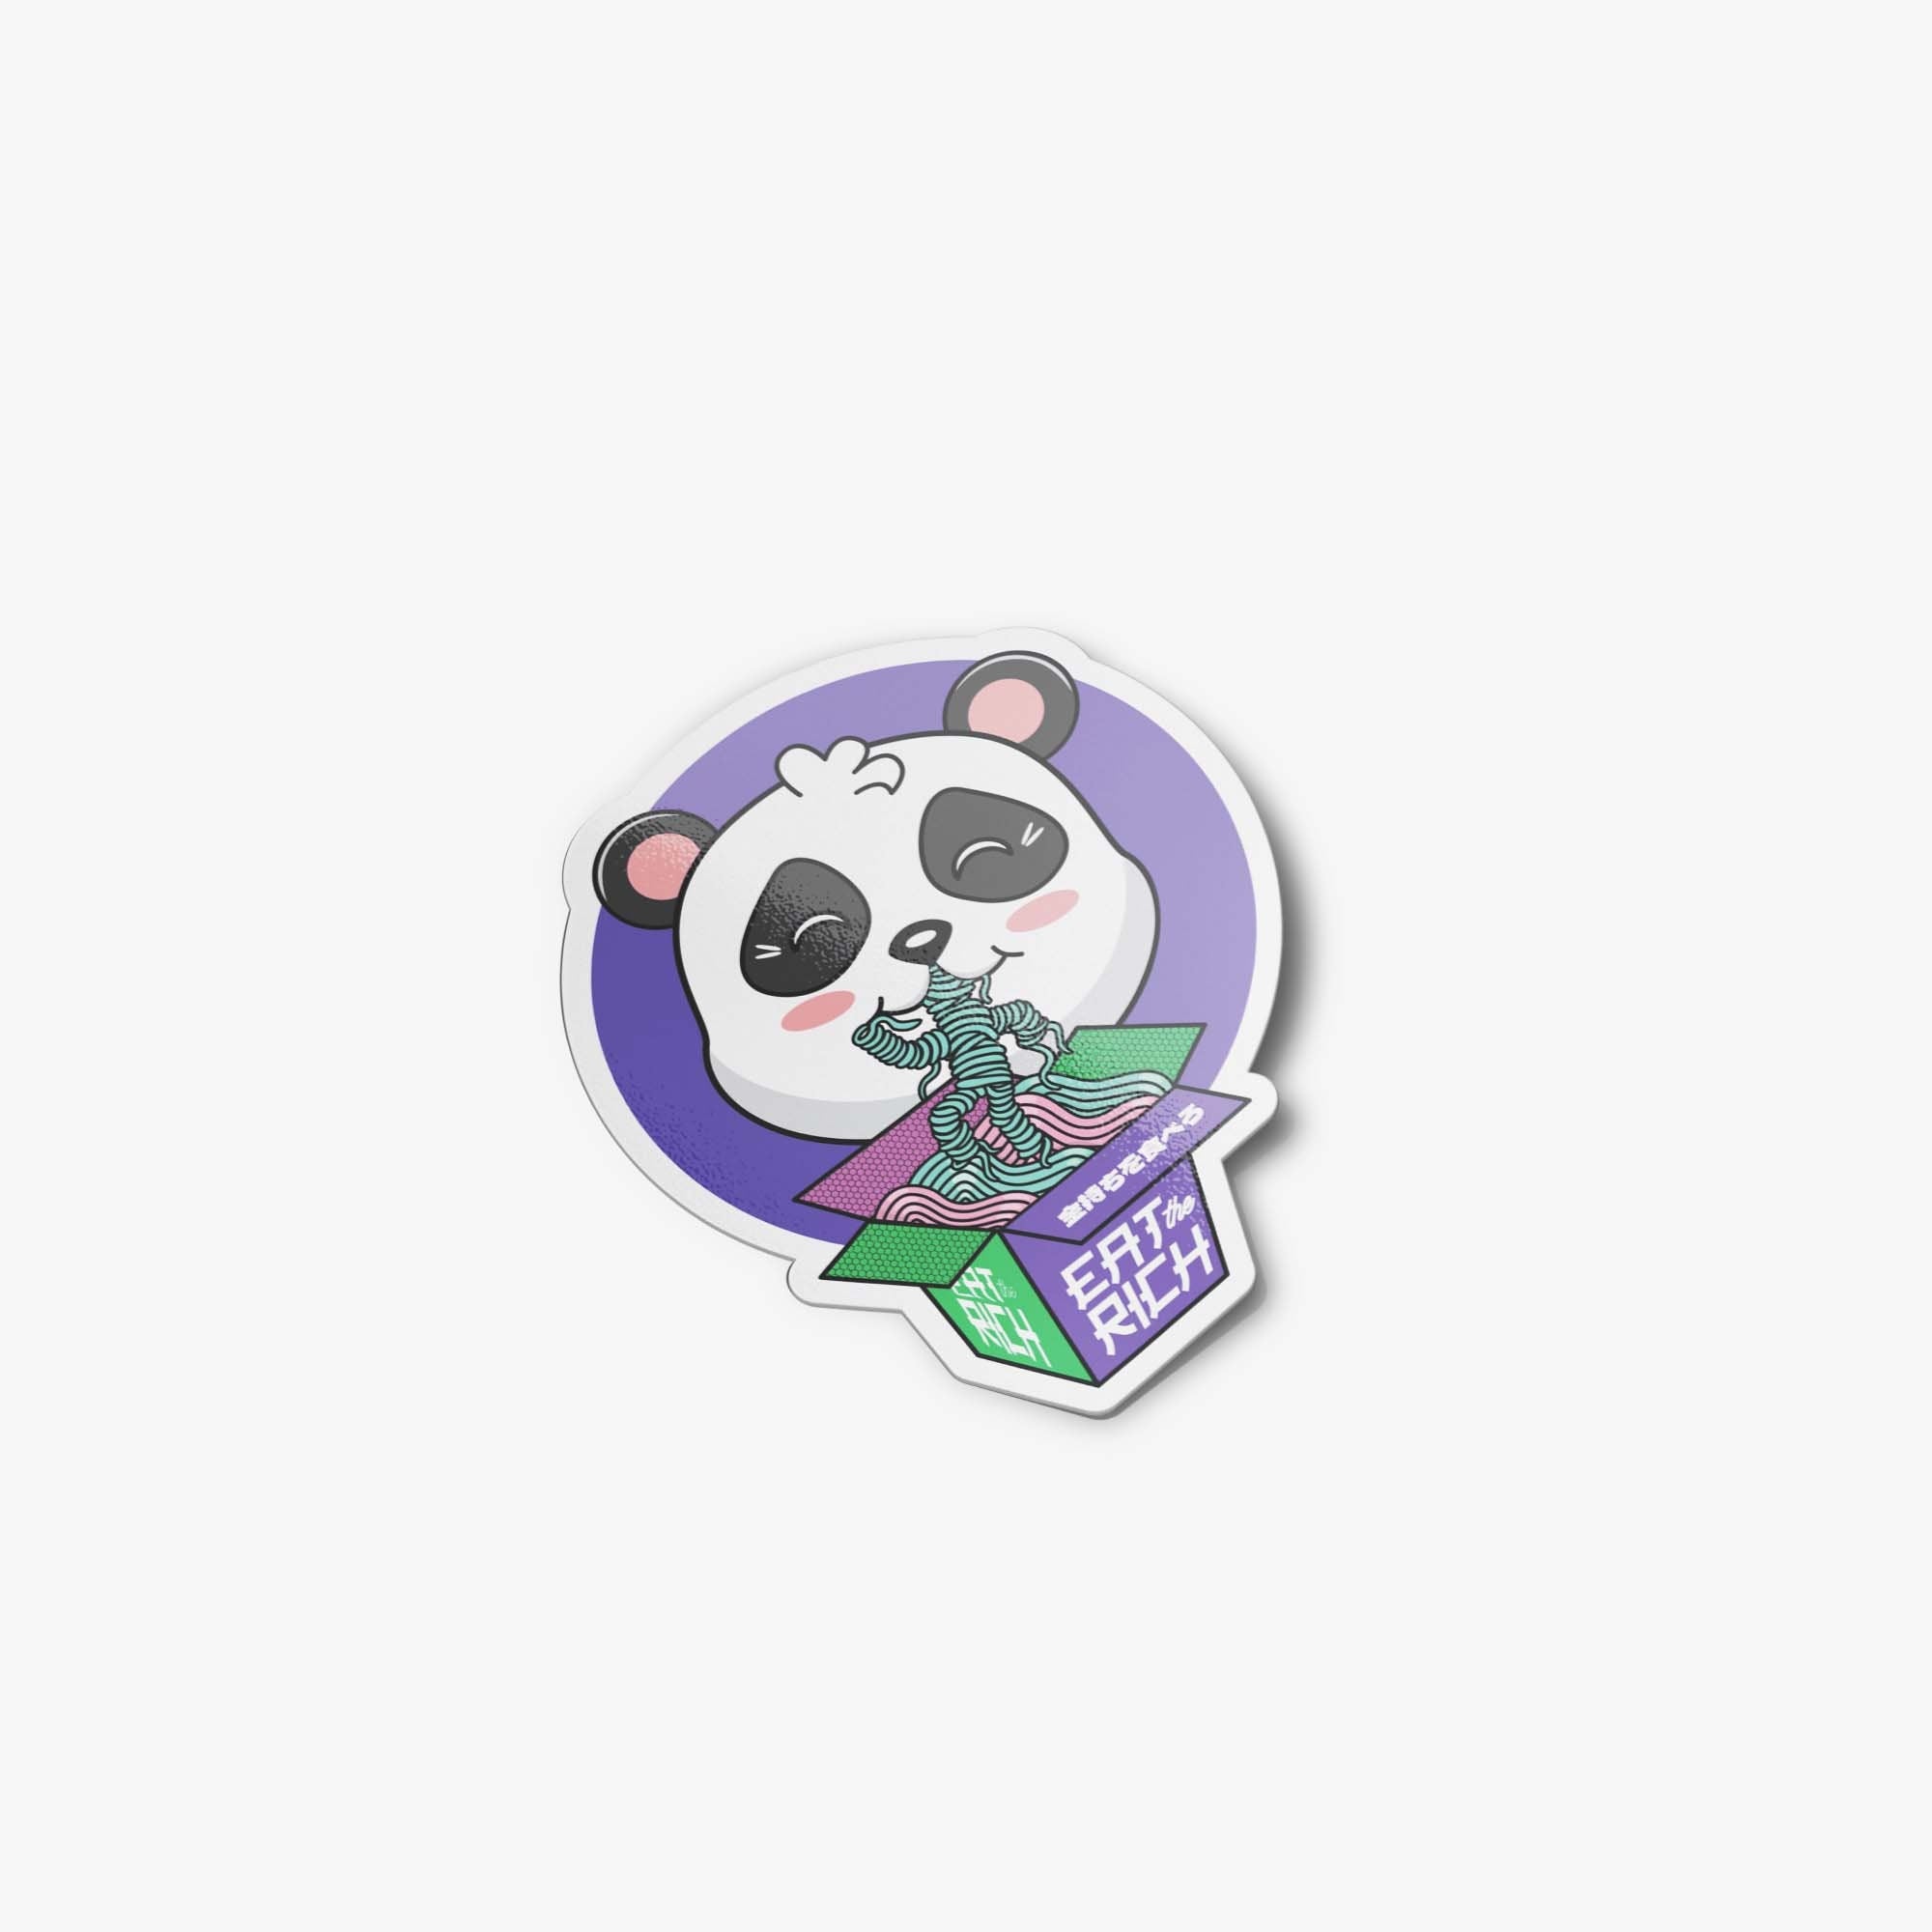 Eat the Rich Ramen Panda Sticker, Anti-Capitalism Holographic Kawaii Sticker, Japanese Style Cute Pastel Stickers, Stocking Stuffer